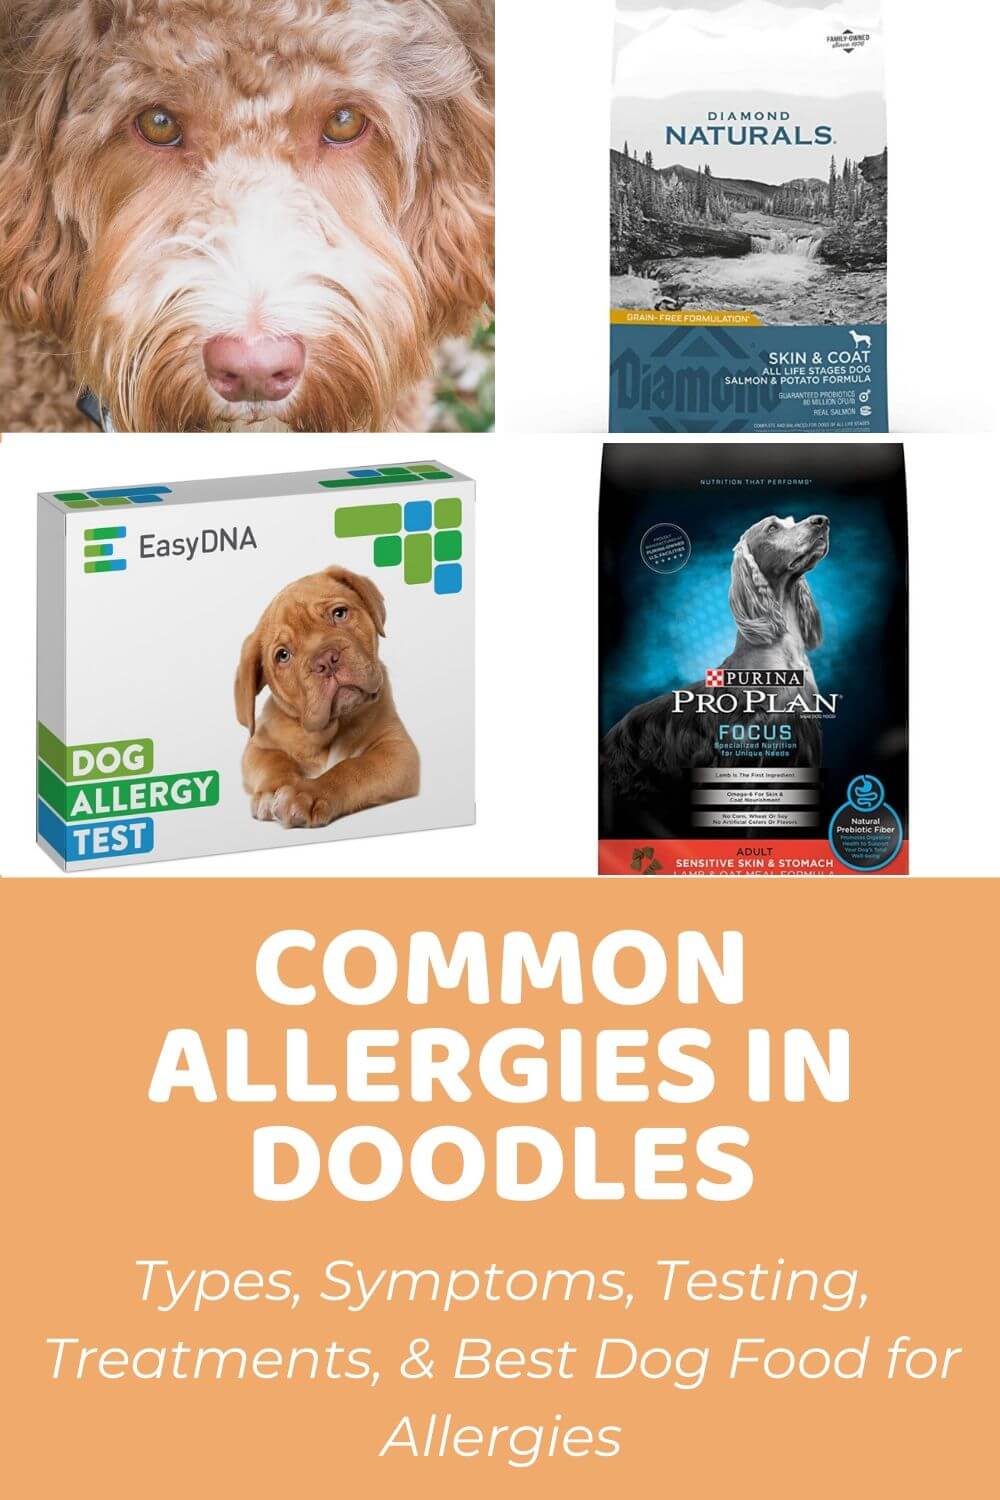 Diet & Nutrition Guide: Goldendoodles